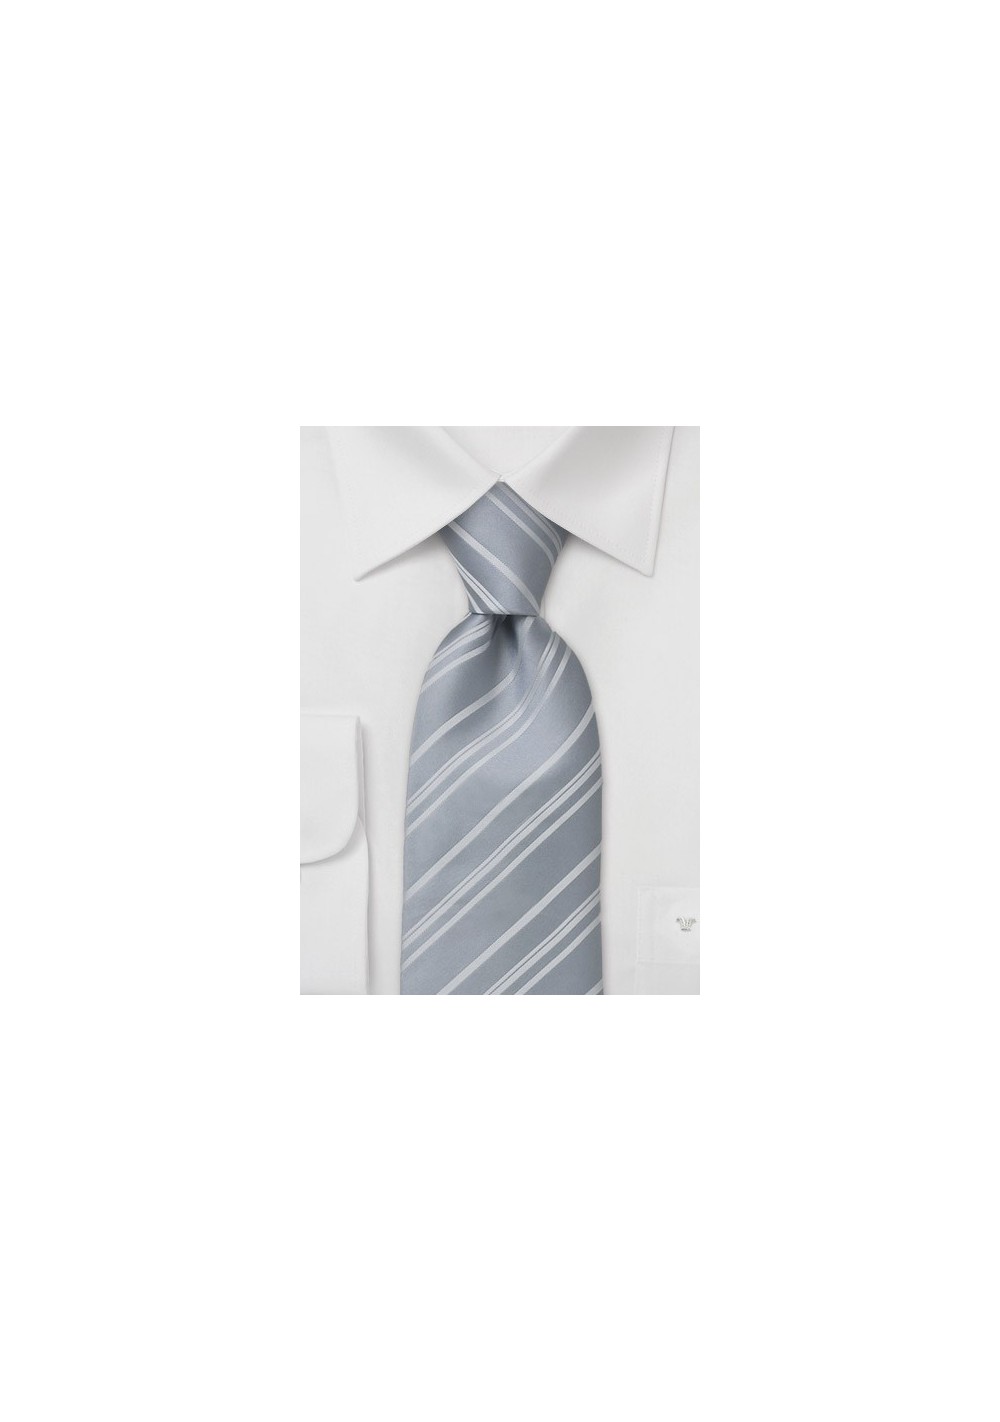 Silver Tie with fine white stripes